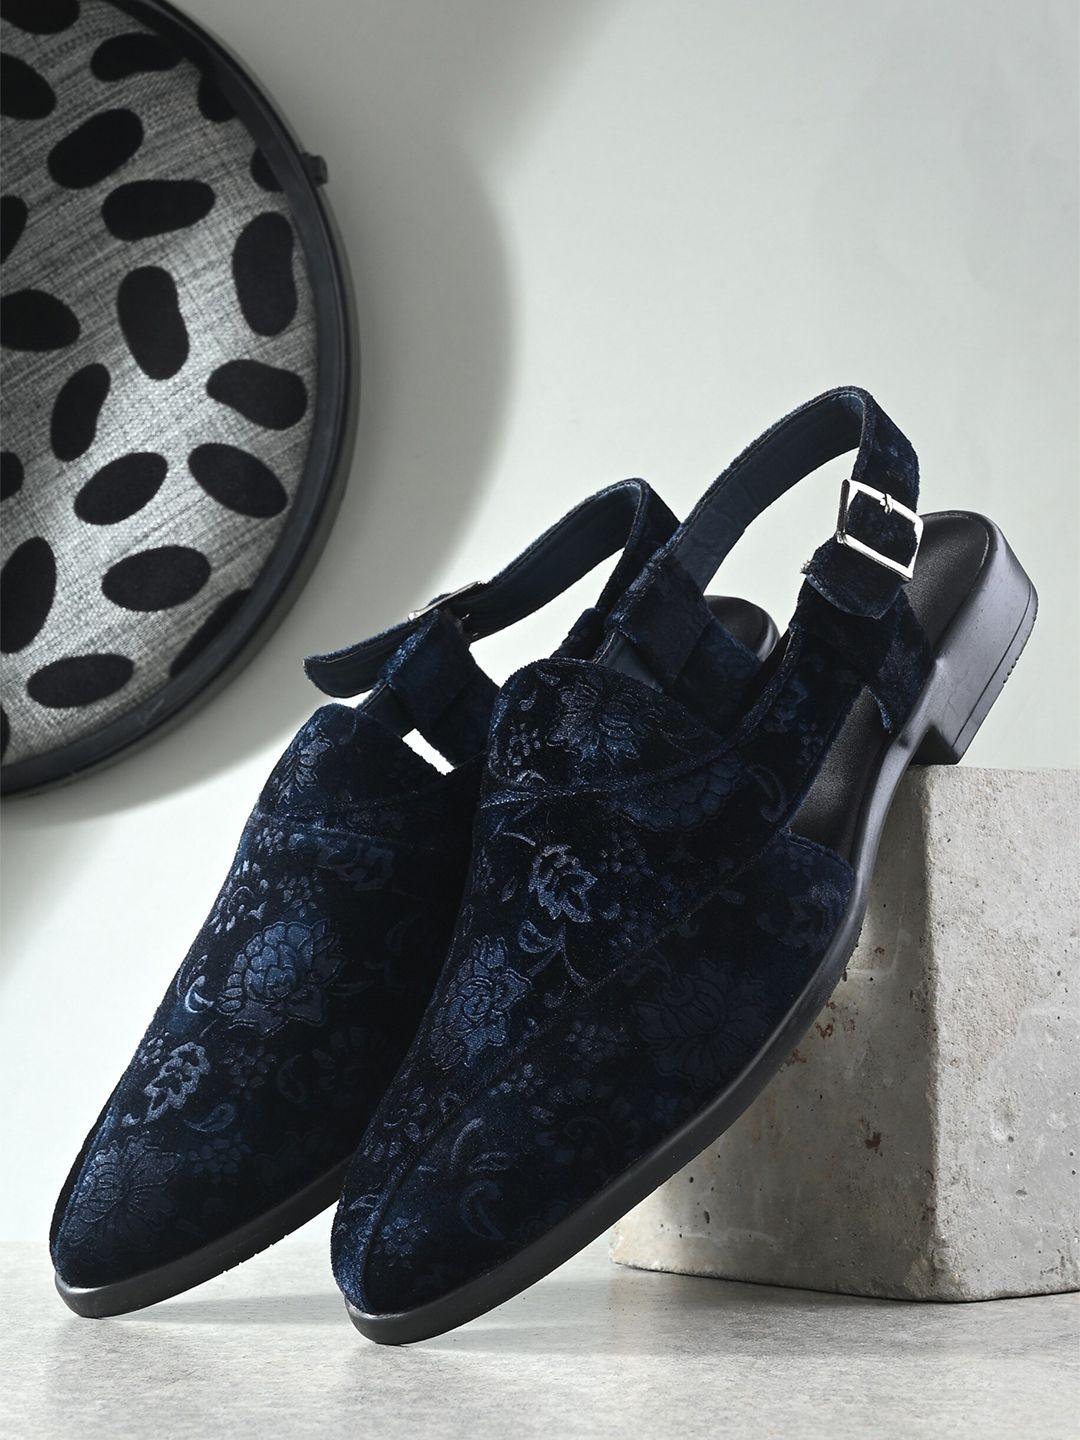 afrojack men blue & black shoe-style sandals